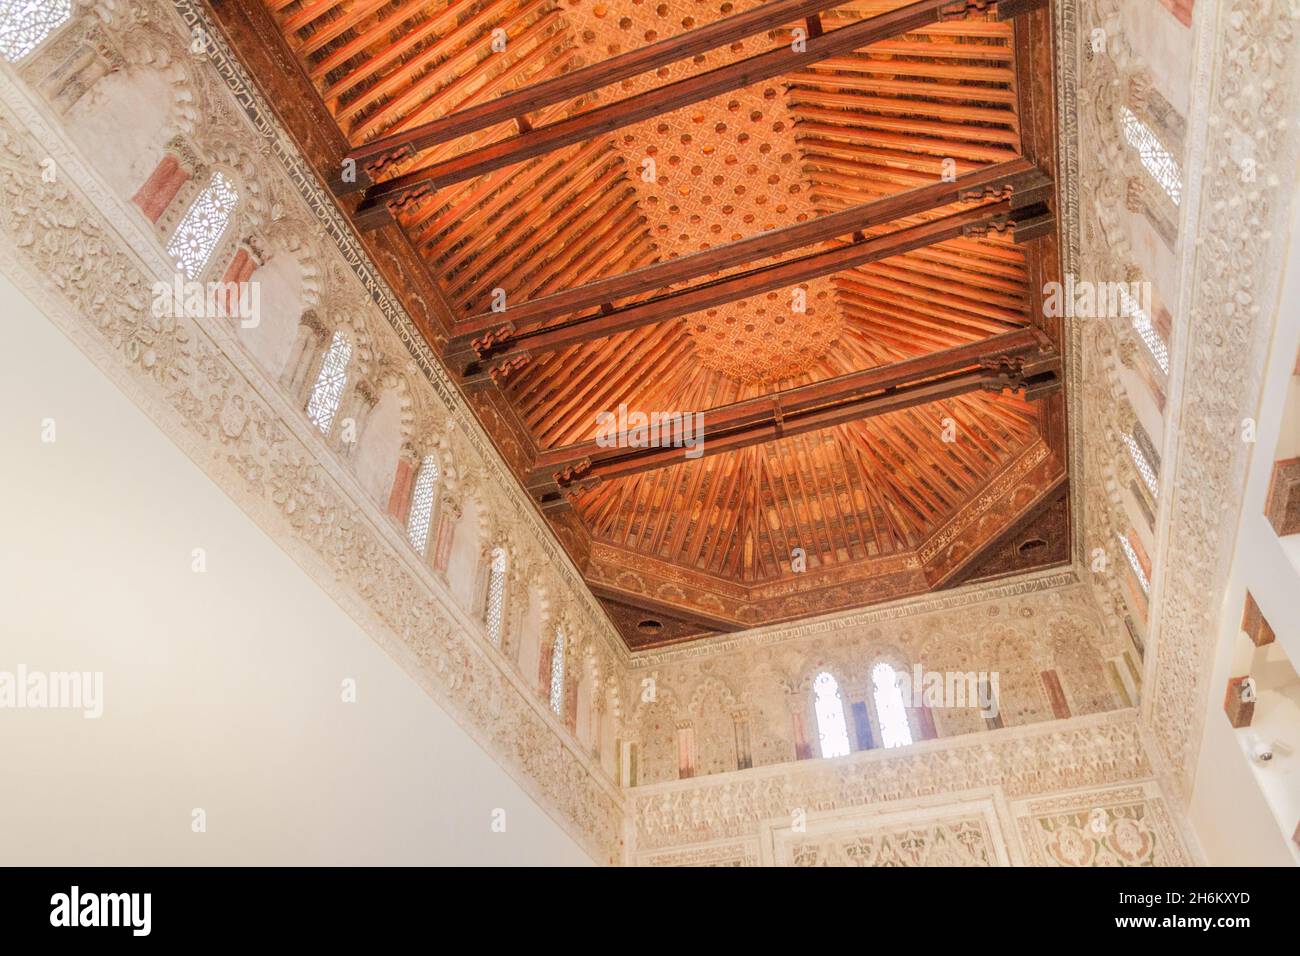 TOLEDO, SPAIN - OCTOBER 23, 2017: Interior of El Transito synagogue in Toledo, Spain Stock Photo